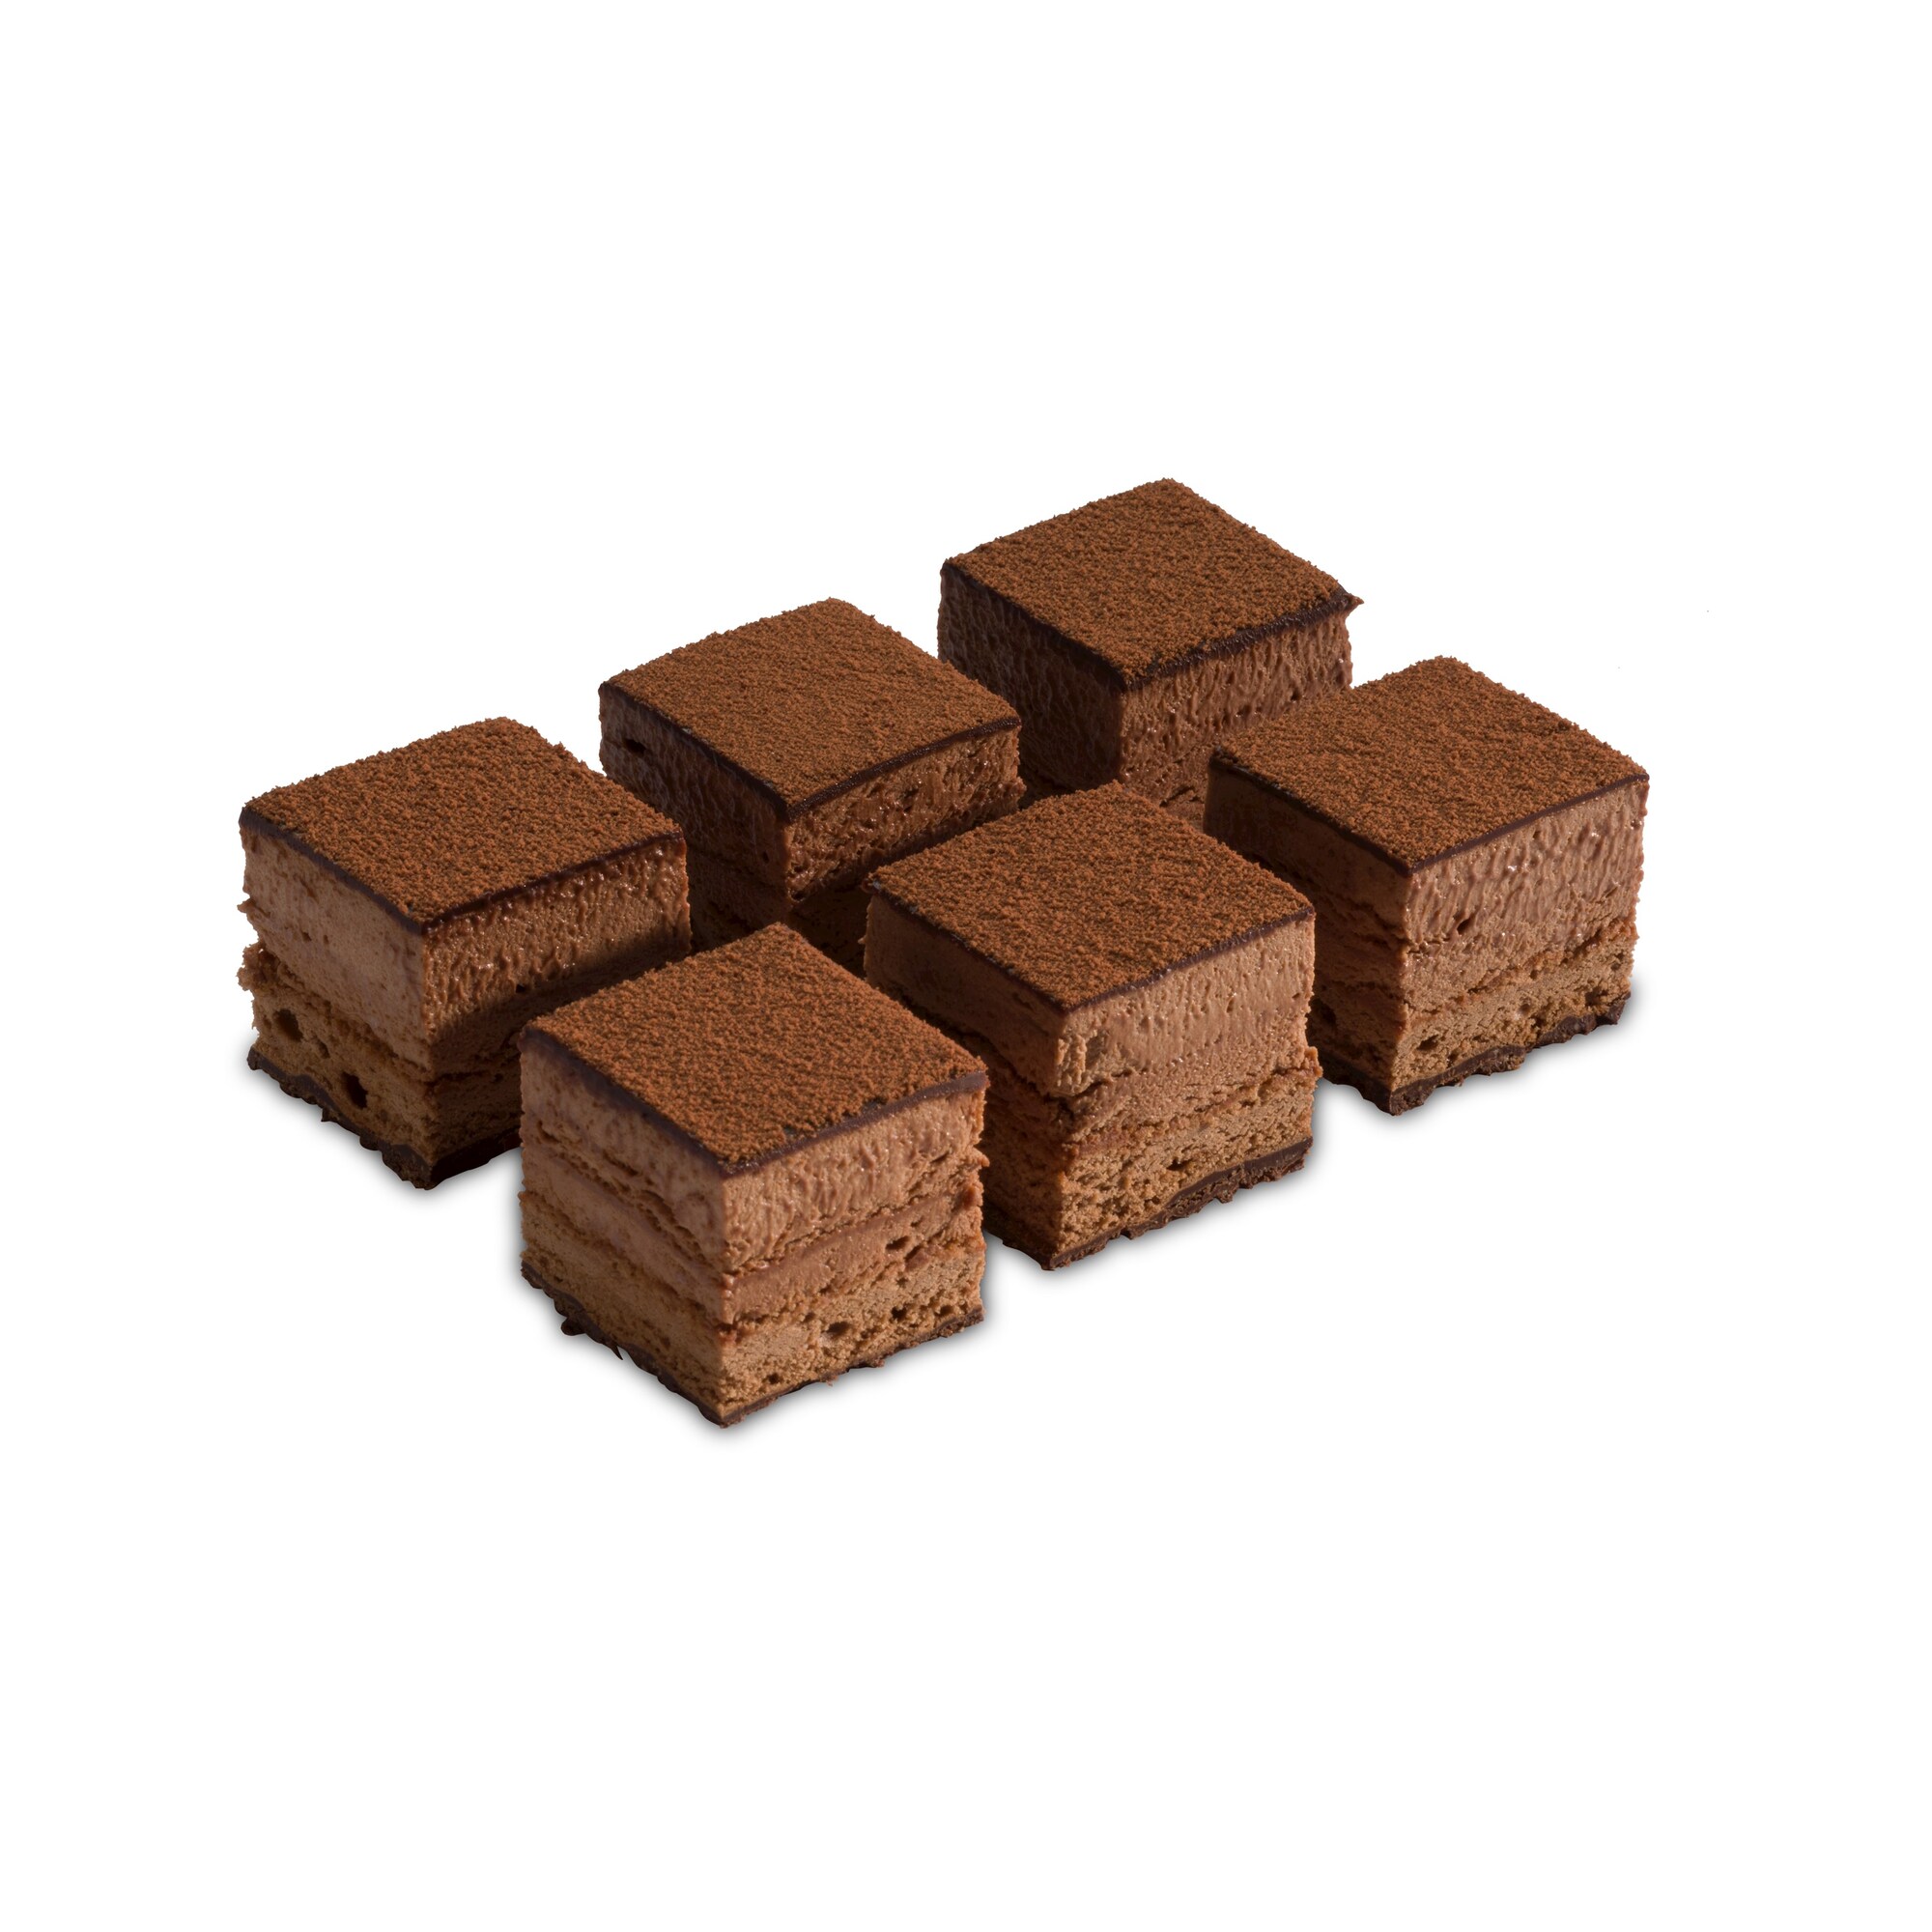 77993 Component chocolade 4x4 cm 36 stuks